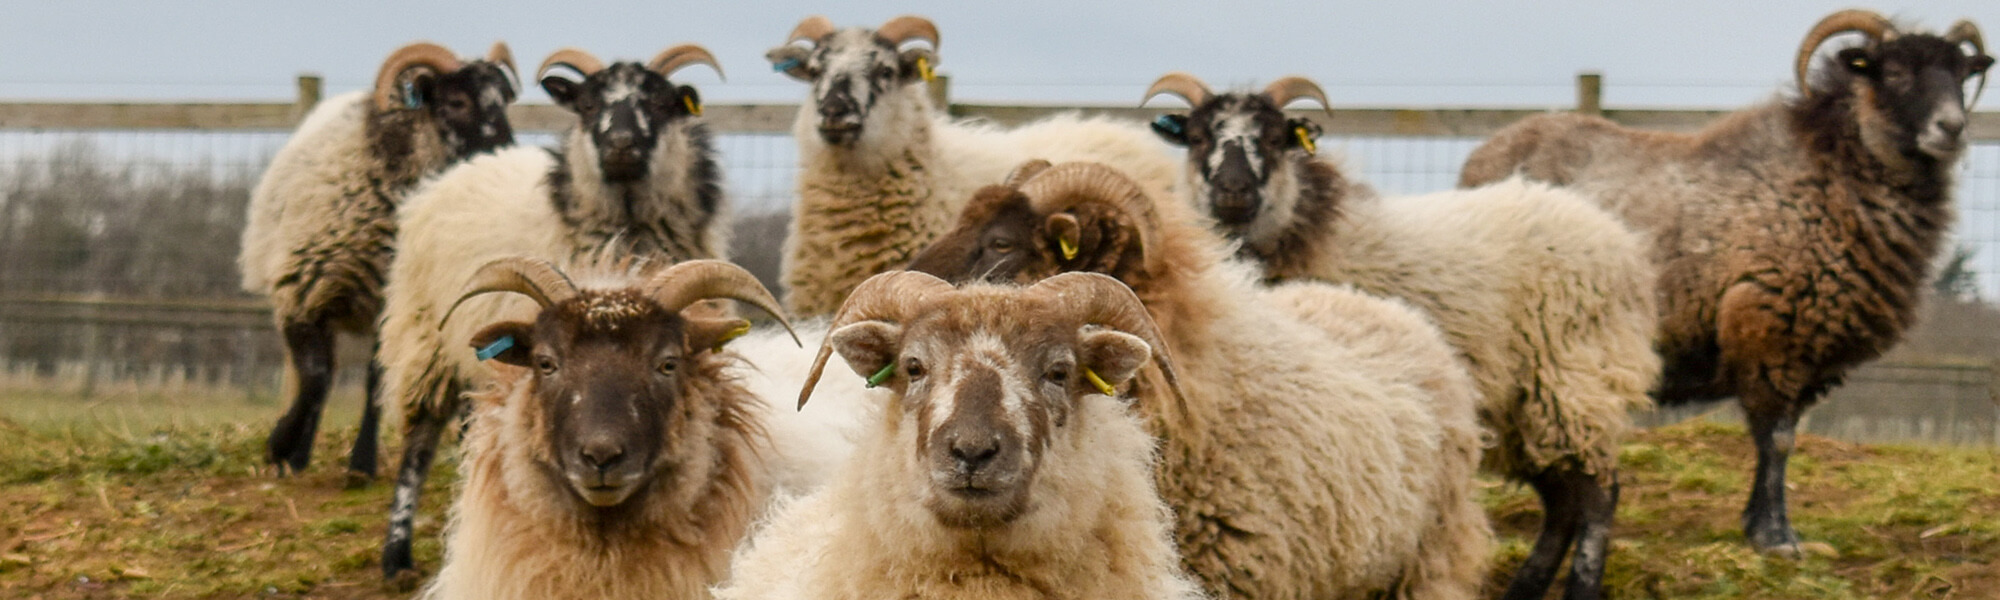 Boreray sheep in field posing for a photo!